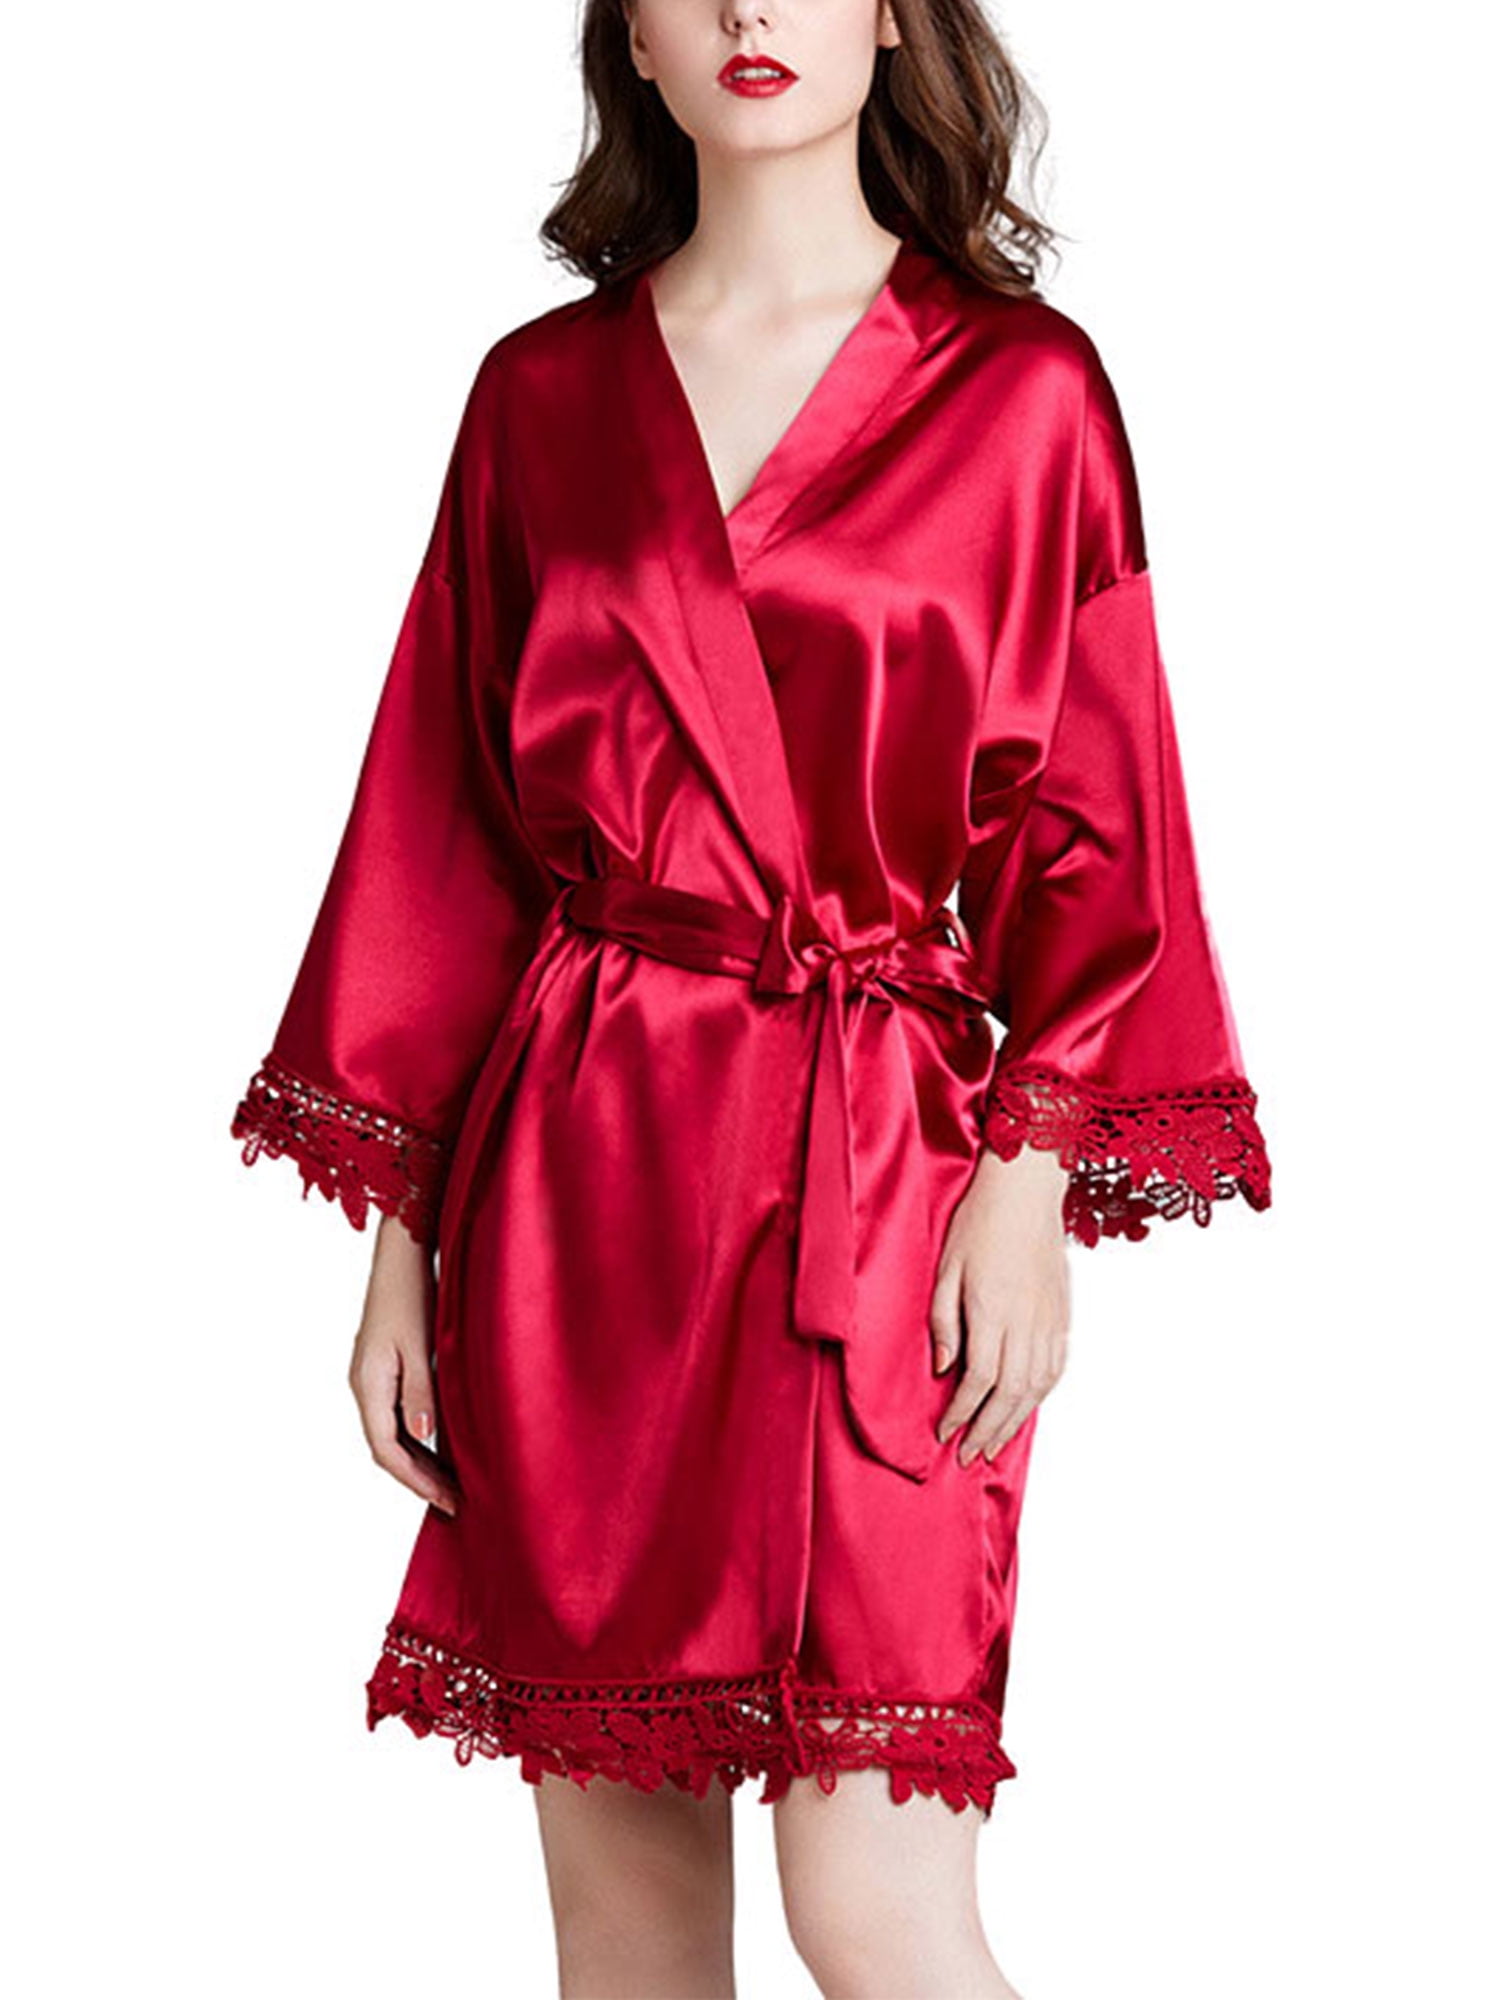 2019 Floral satin bridesmaid robes gowns bride bath robe wedding kimono robes